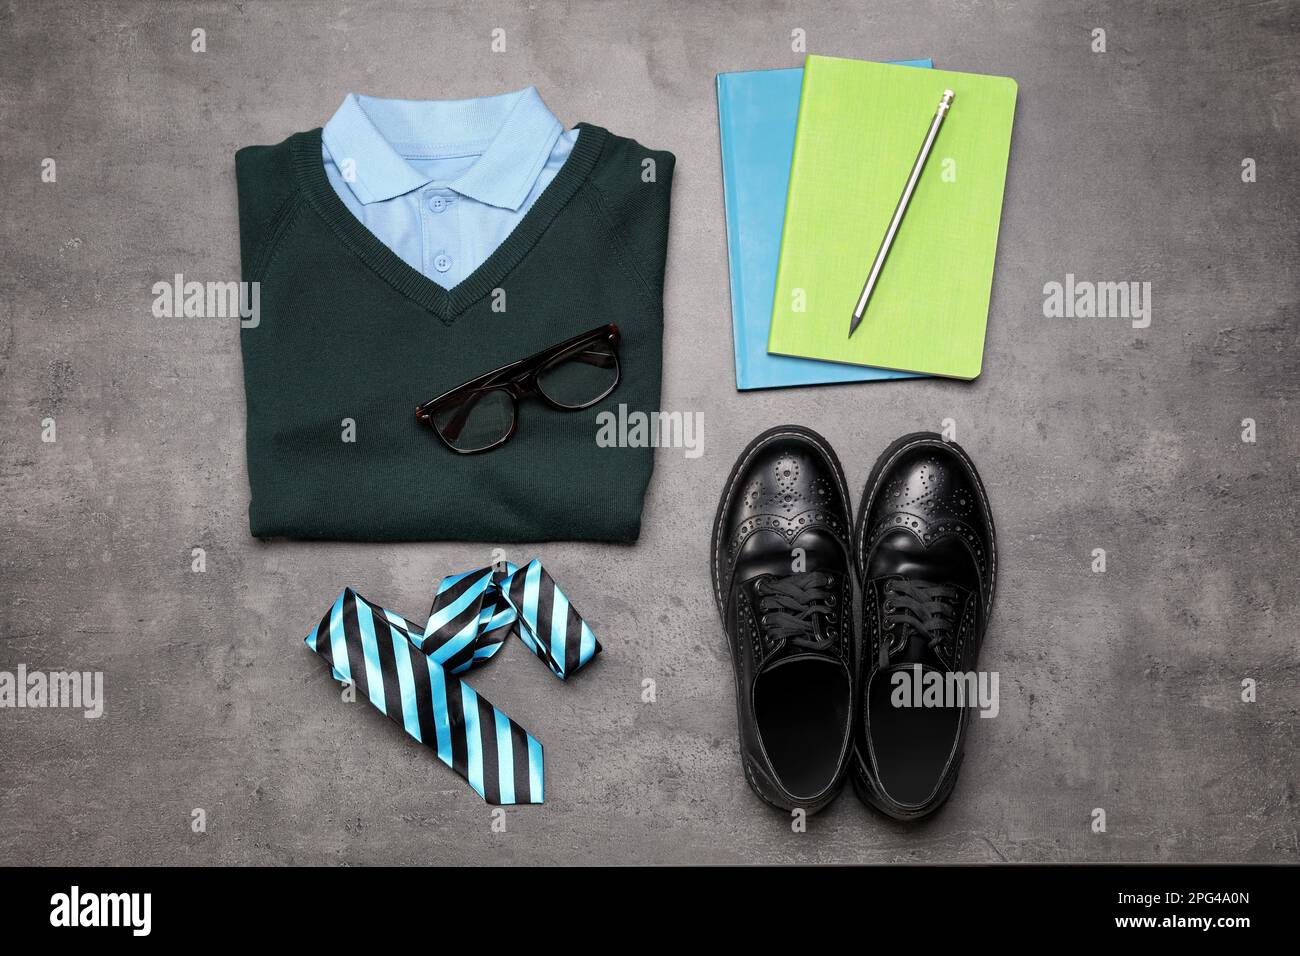 Stylish school uniform for boy and stationery on grey background, flat lay Stock Photo